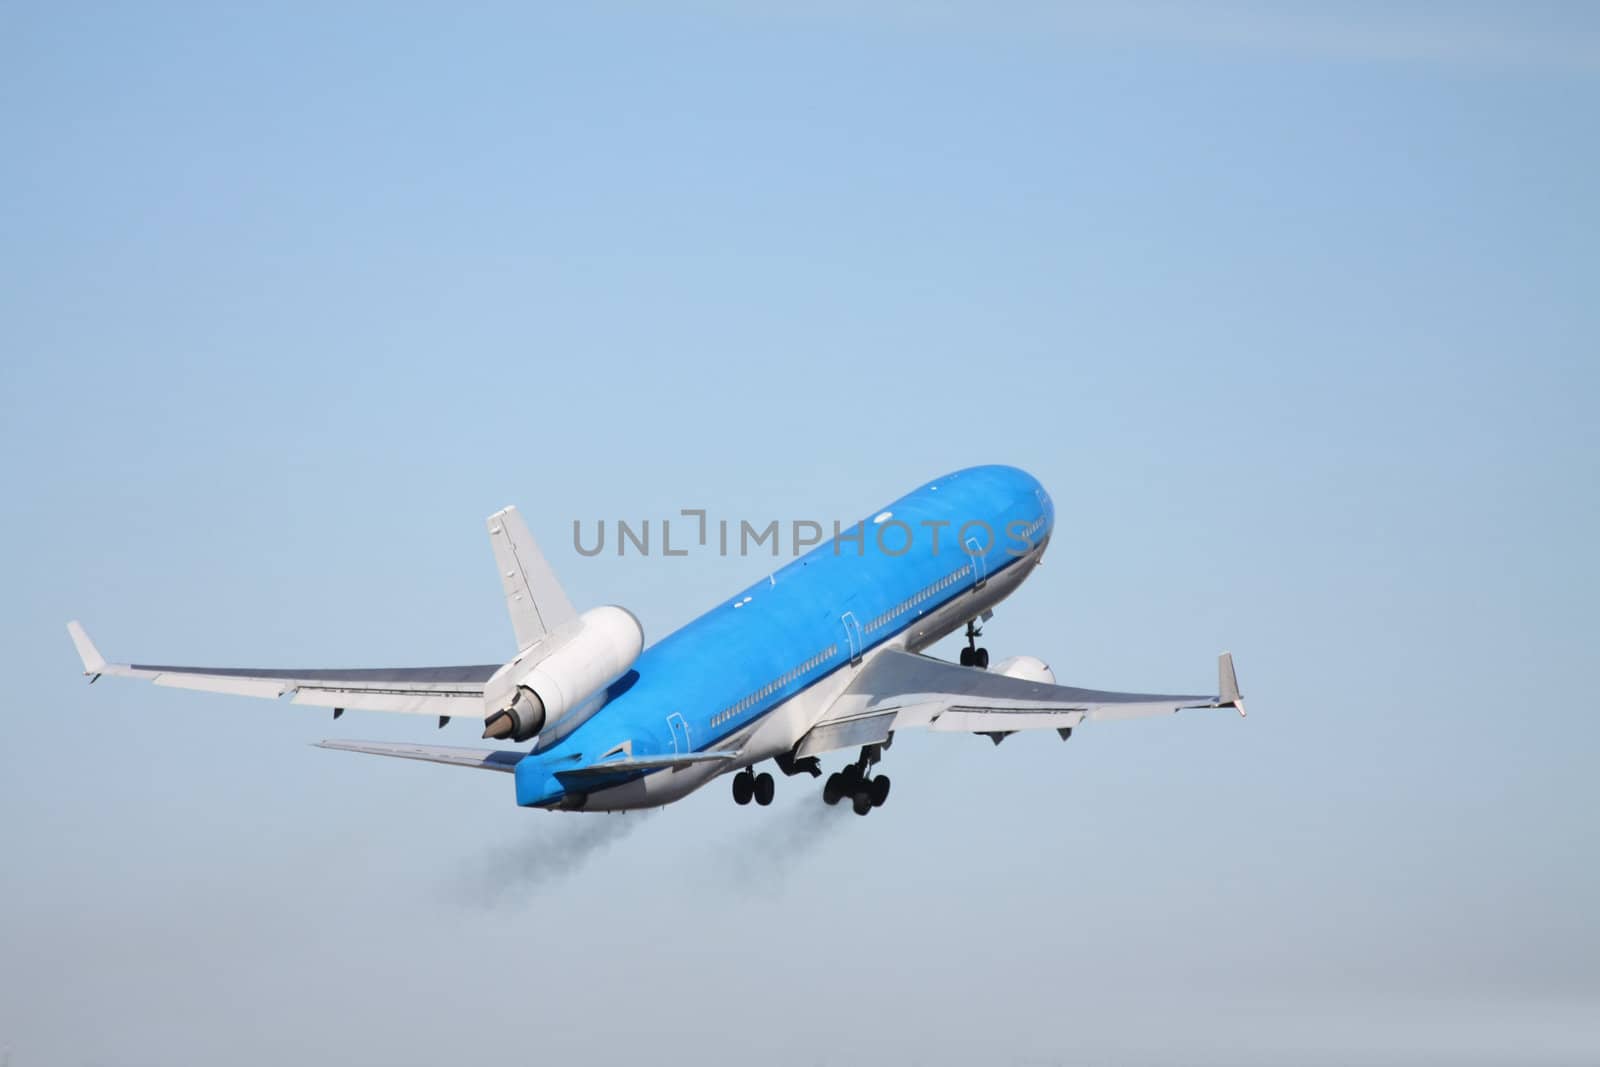 Plane in a clear blue sky by studioportosabbia